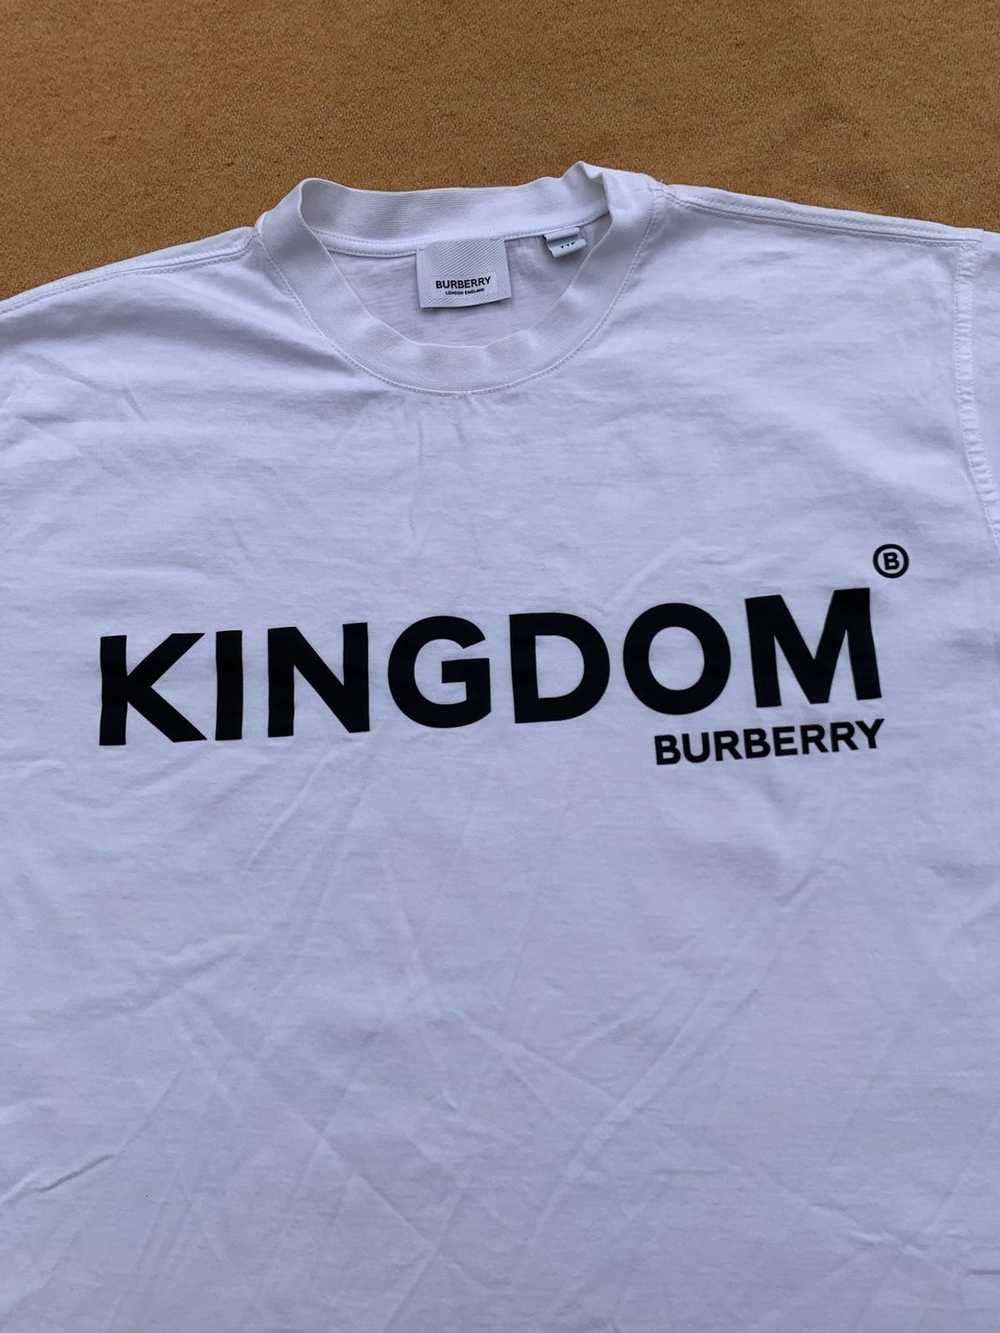 Burberry Kingdom T Shirt - image 3